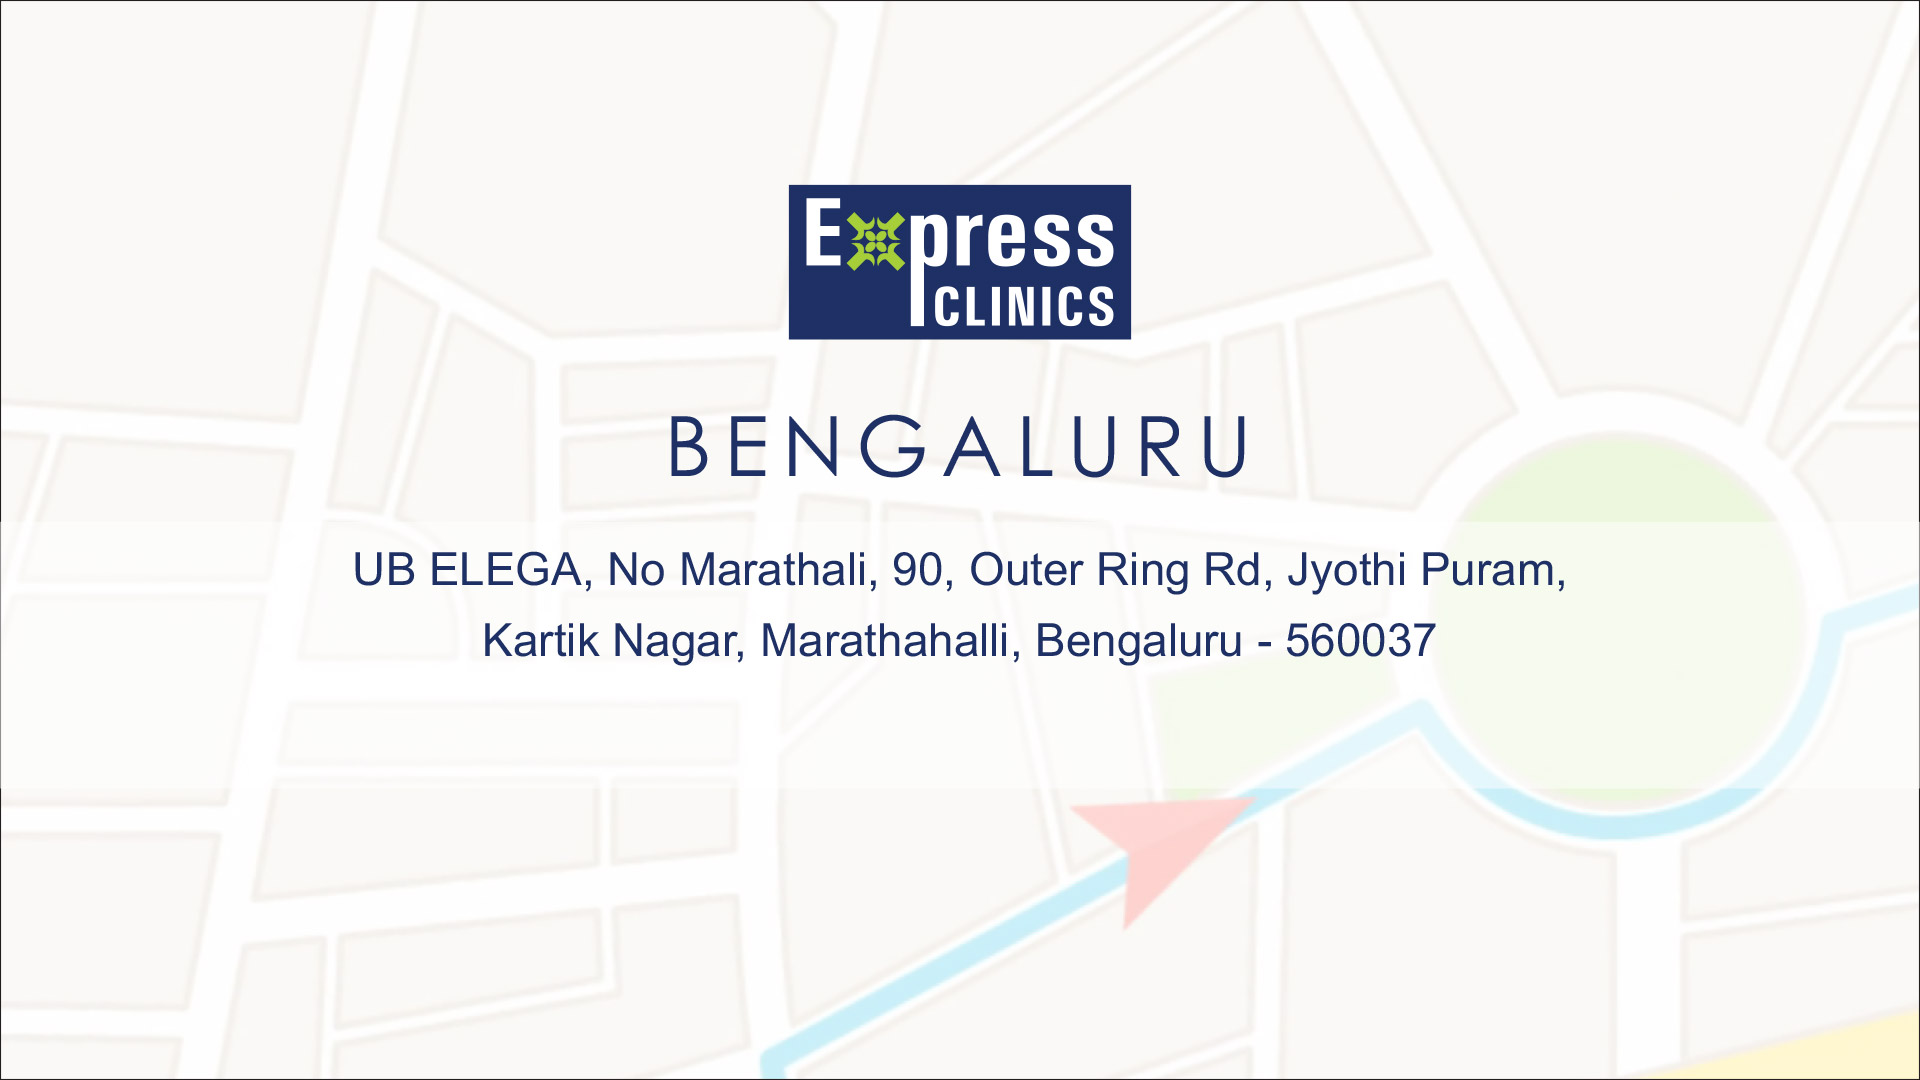 Express Clinics Marathahalli Bangalore